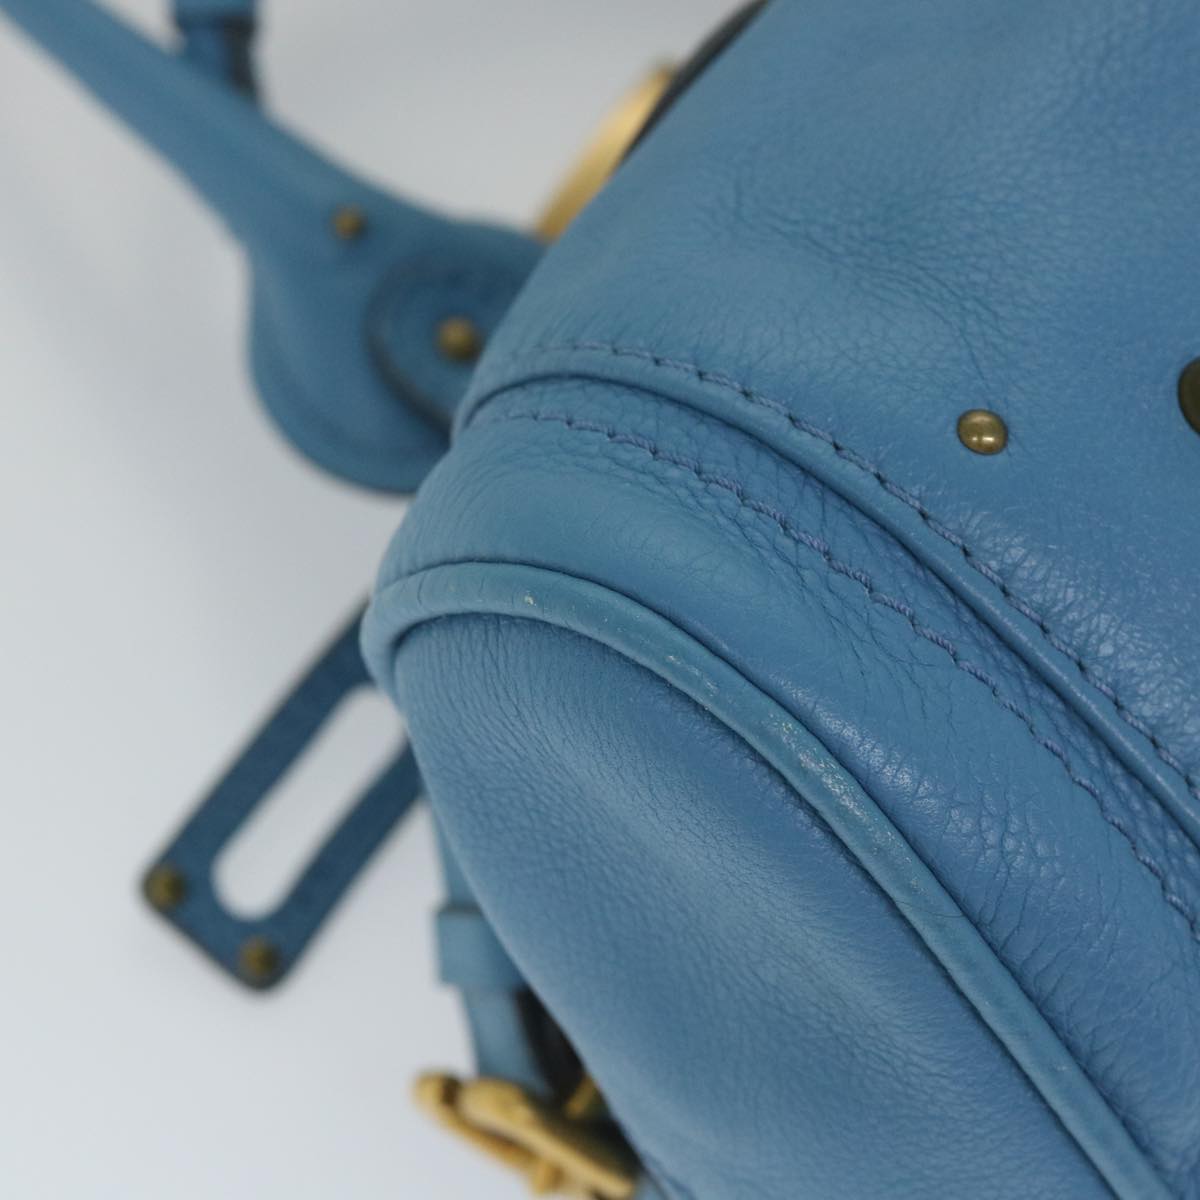 Chloe Paddington Shoulder Bag Leather Blue Auth 56594